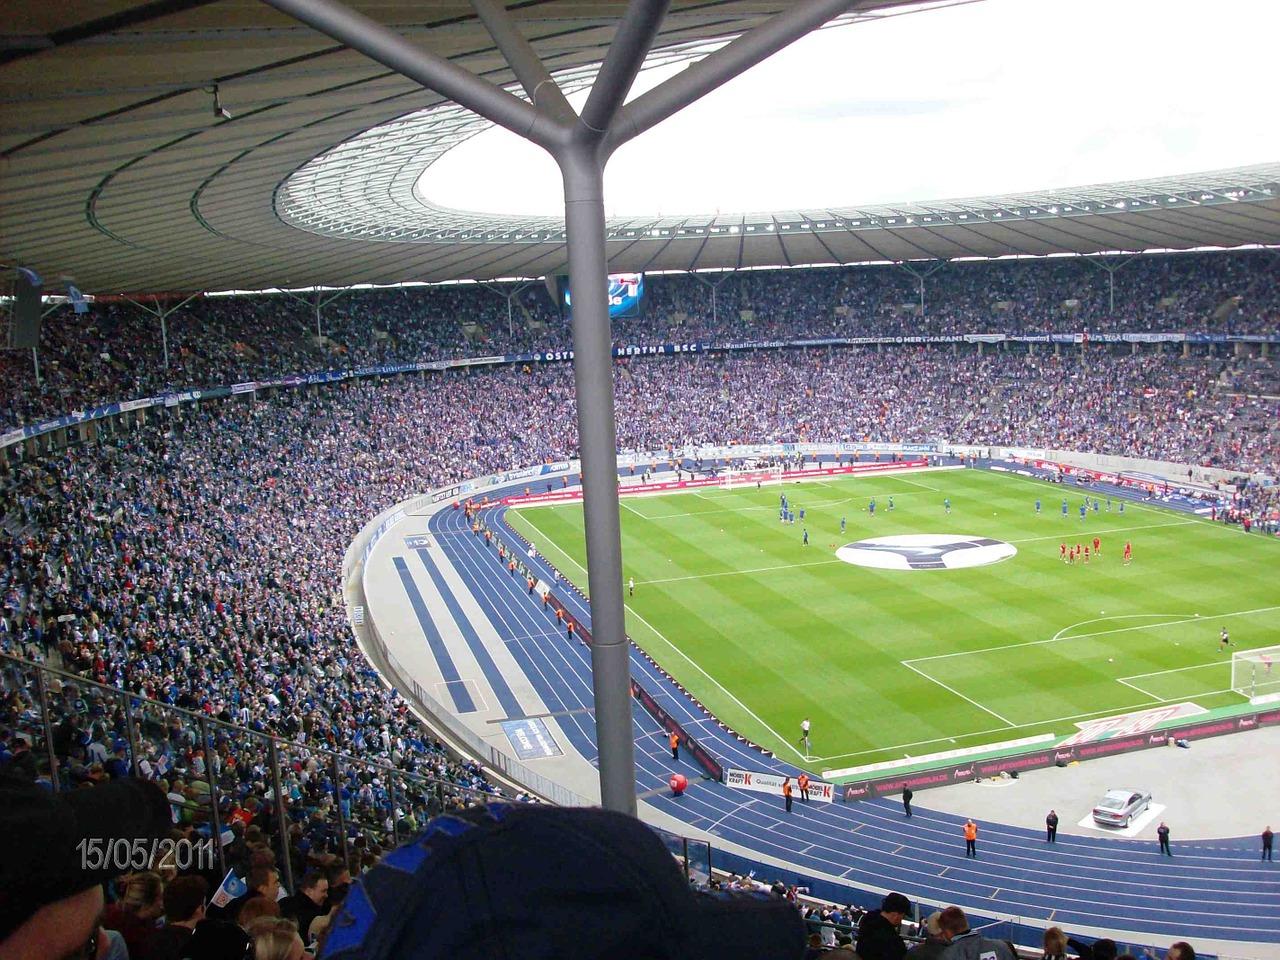 Olympiastadion - Home to Hertha Berlin